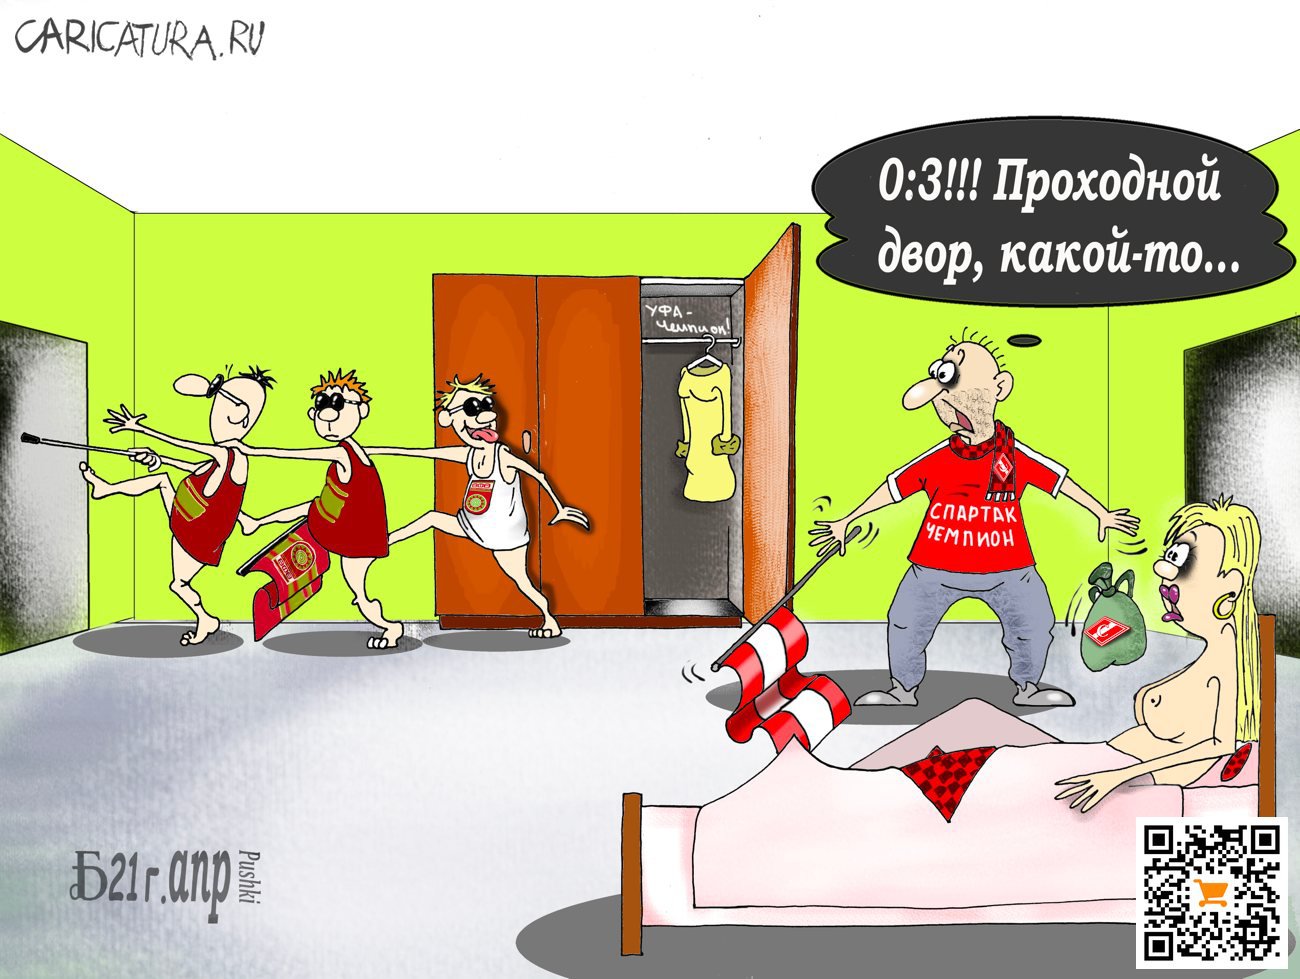 Карикатура "Про итоги уходящего тура", Борис Демин